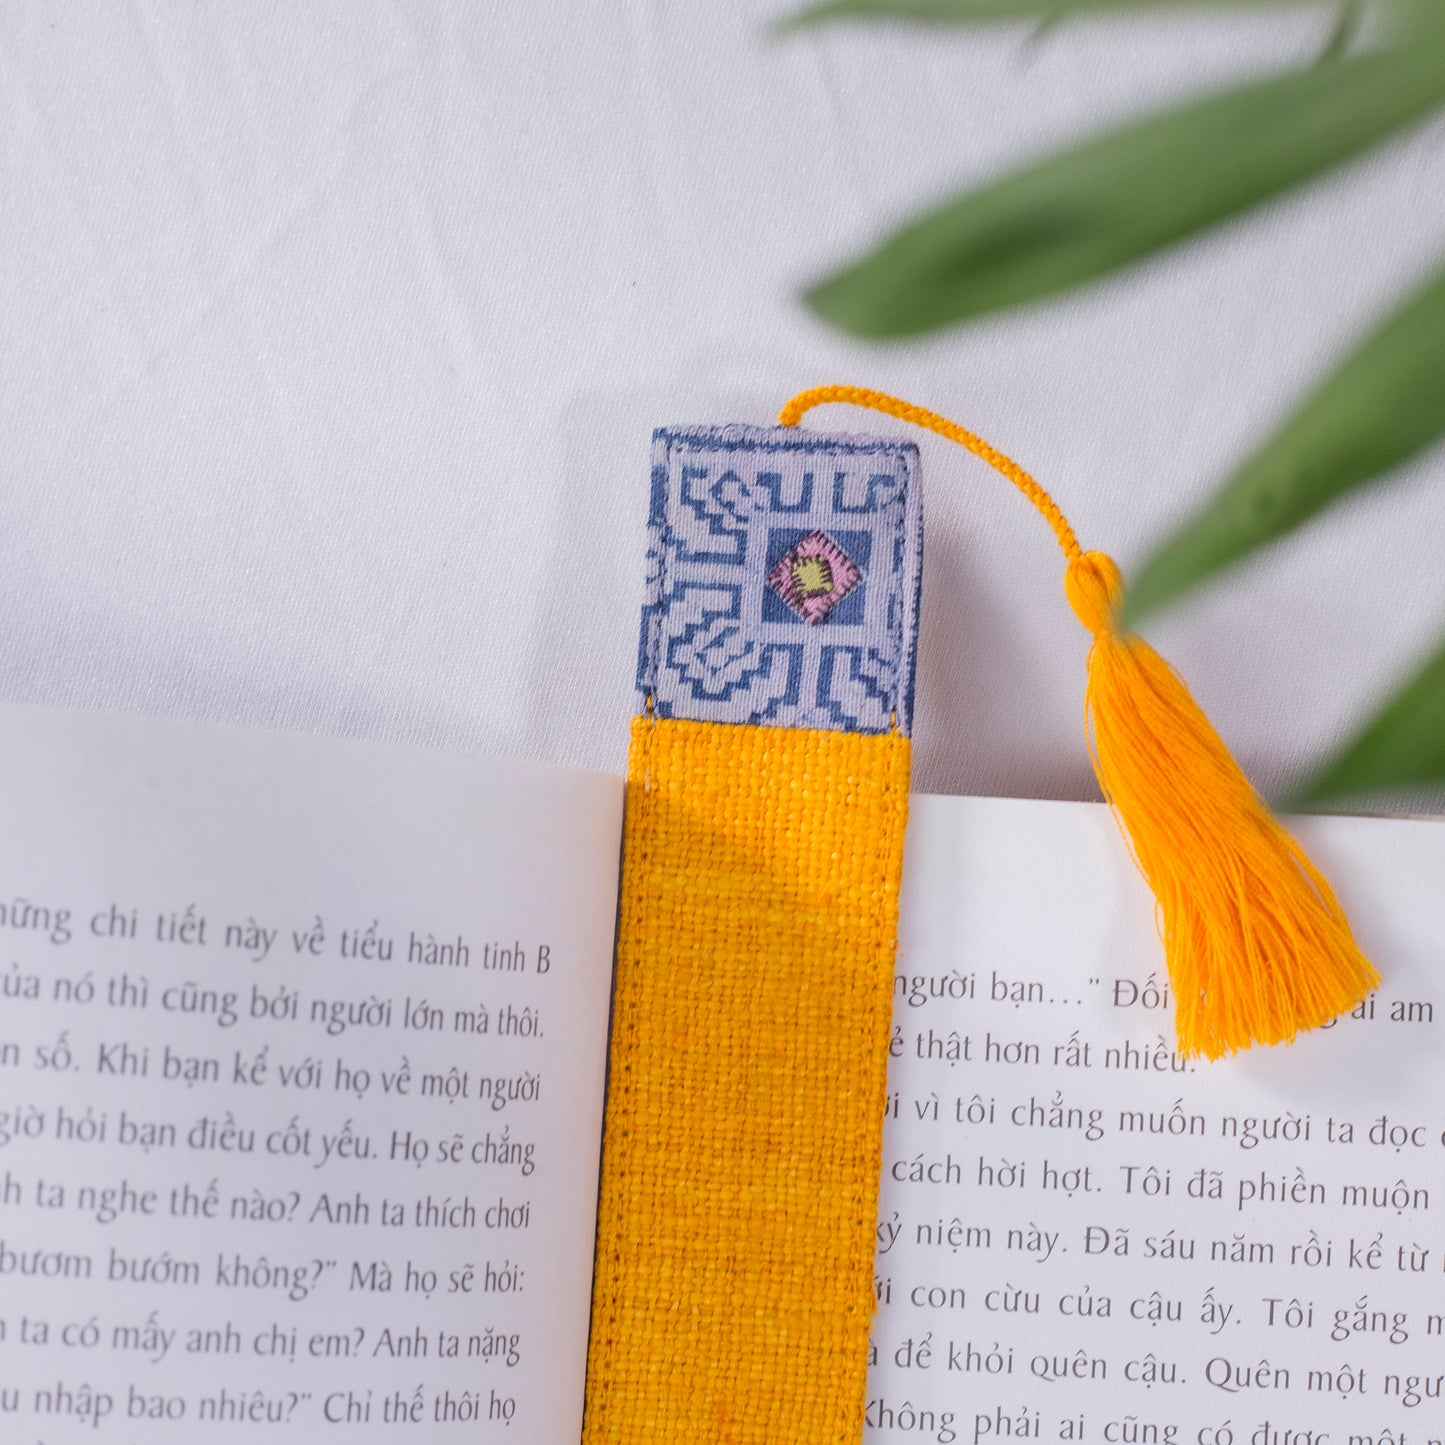 Hemp orange bookmark with vintage batik patch